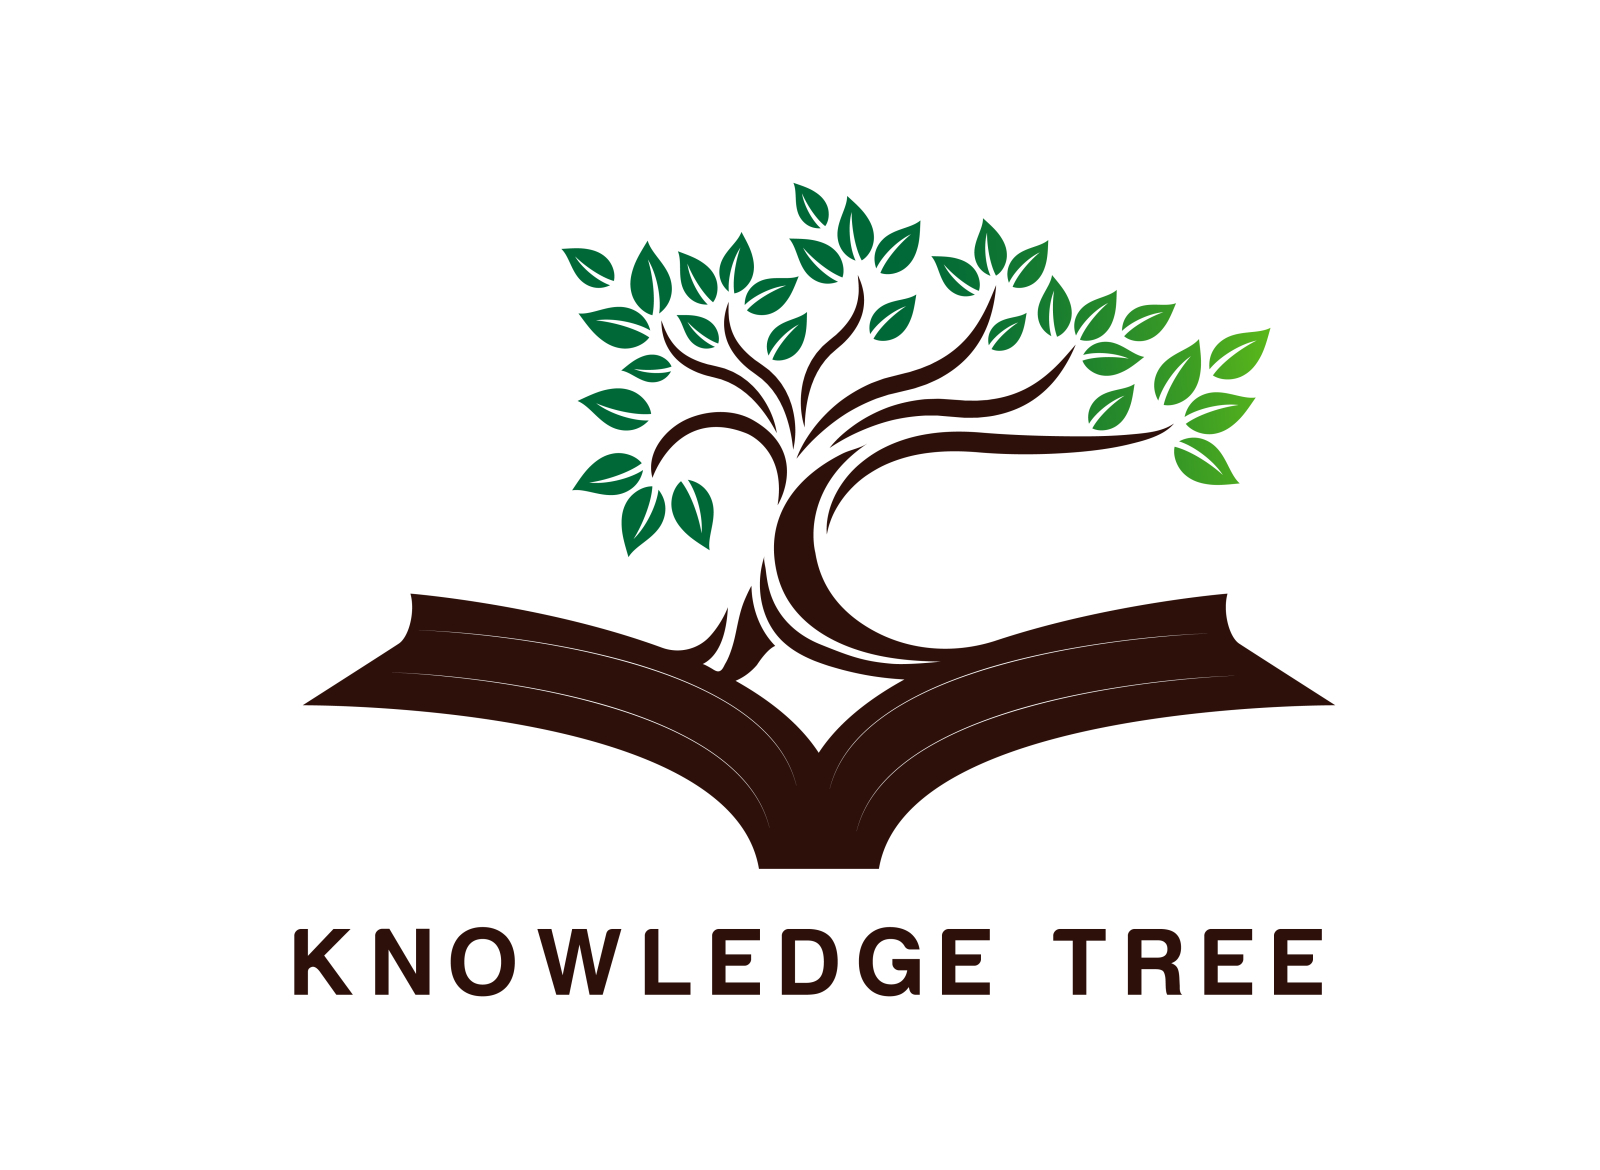 Global Knowledge Logo PNG Transparent & SVG Vector - Freebie Supply